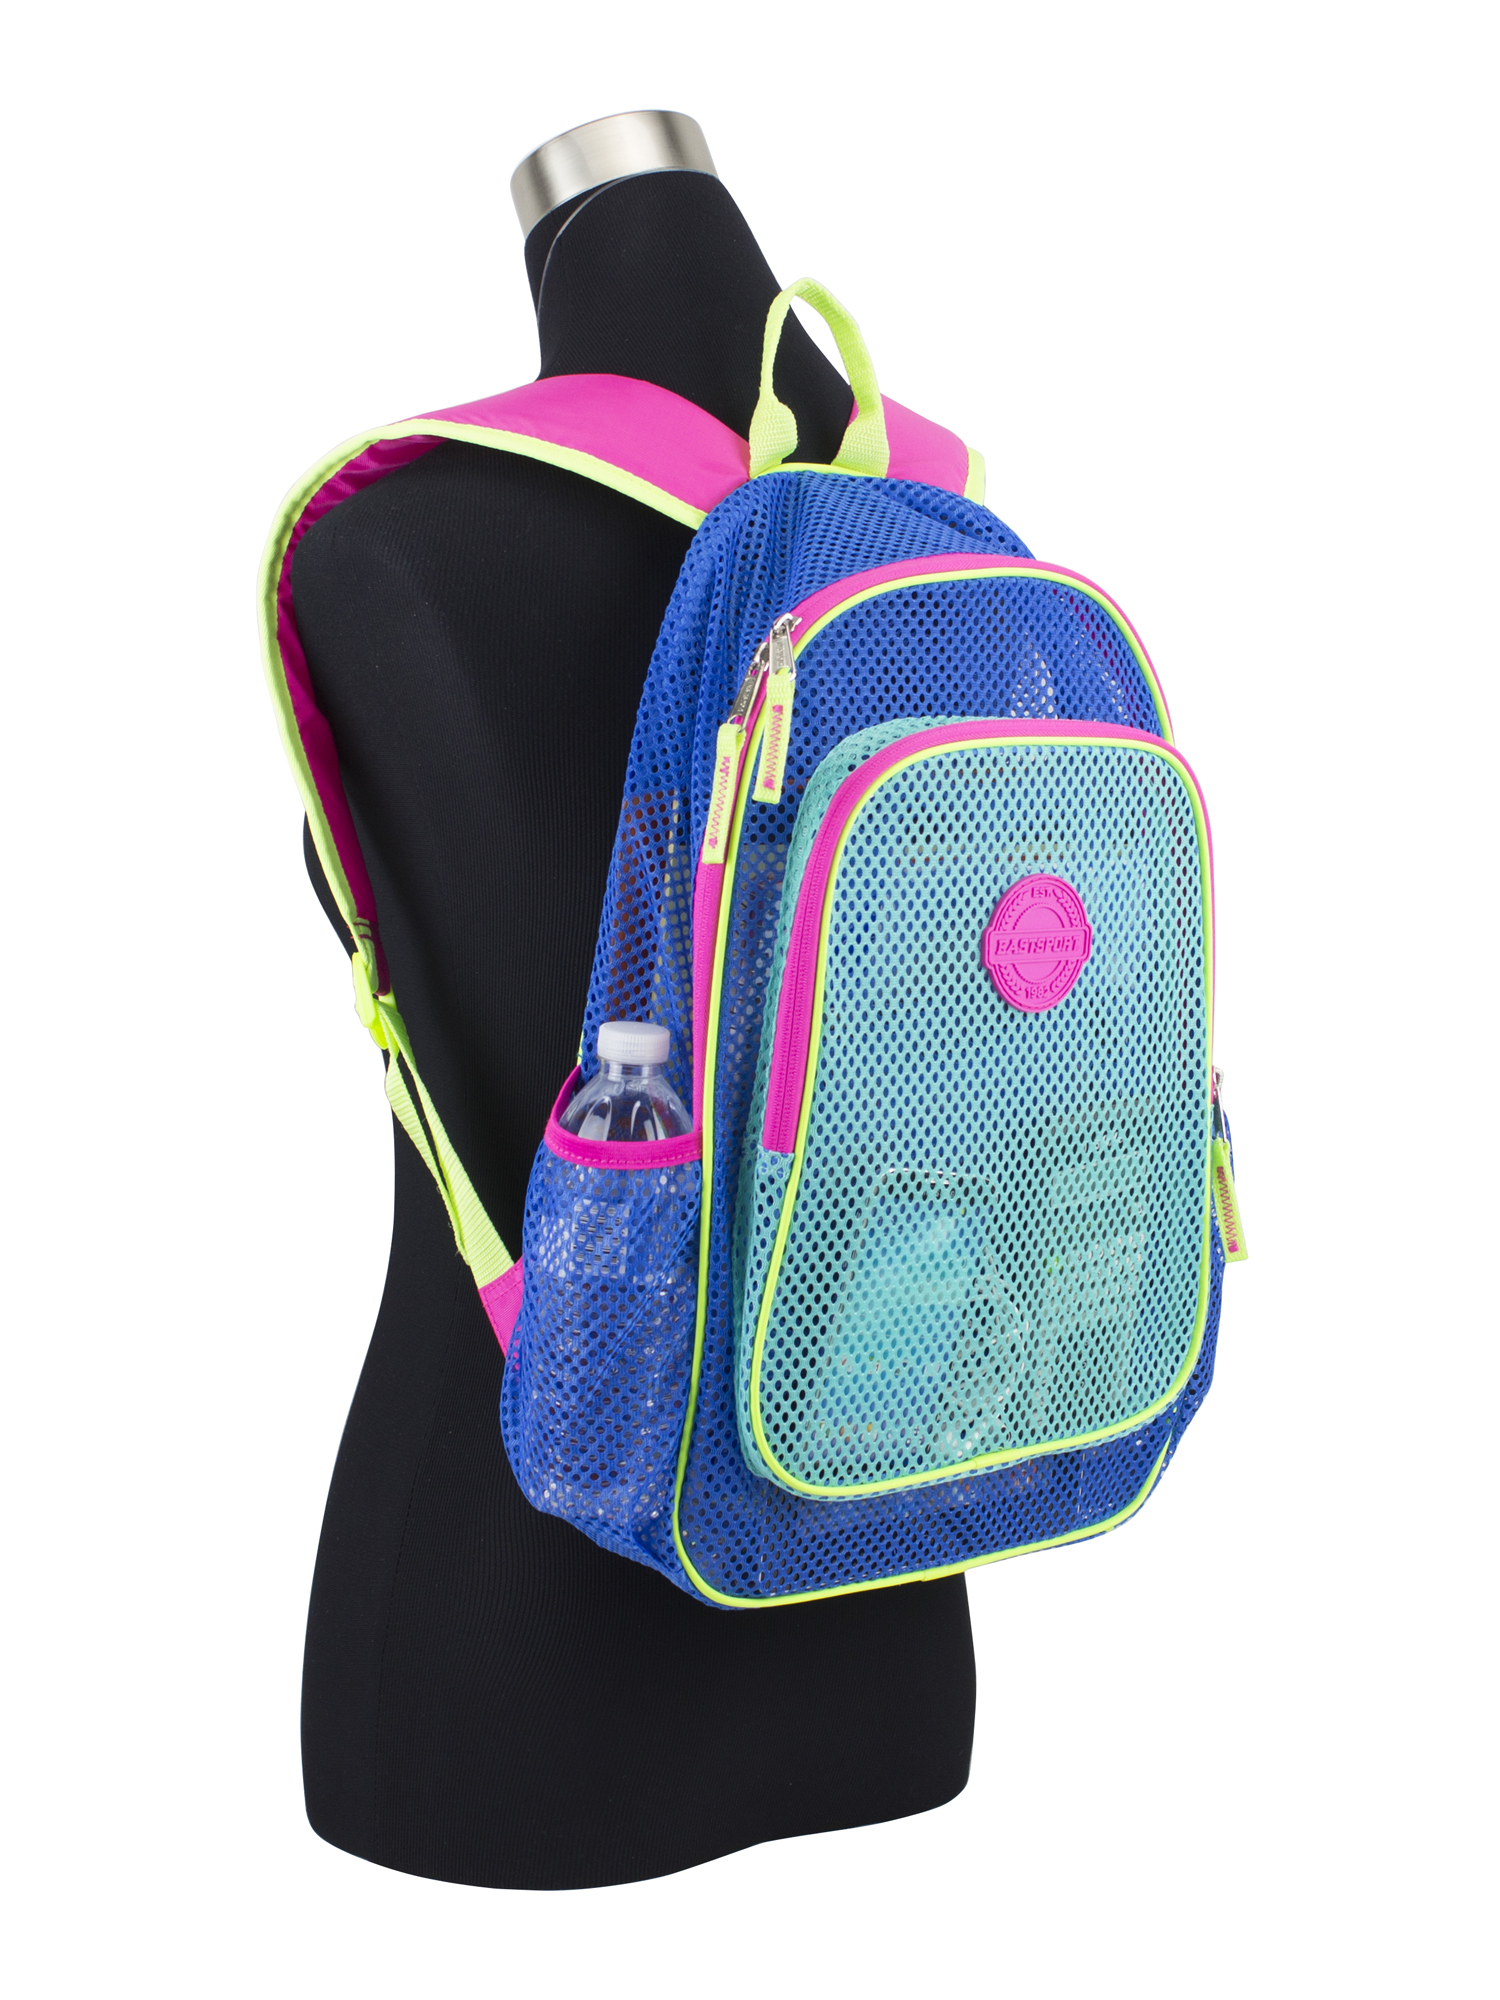 Eastsport Multi-Purpose Mesh Dynamic Blue Backpack with Adjustable Straps - image 5 of 6